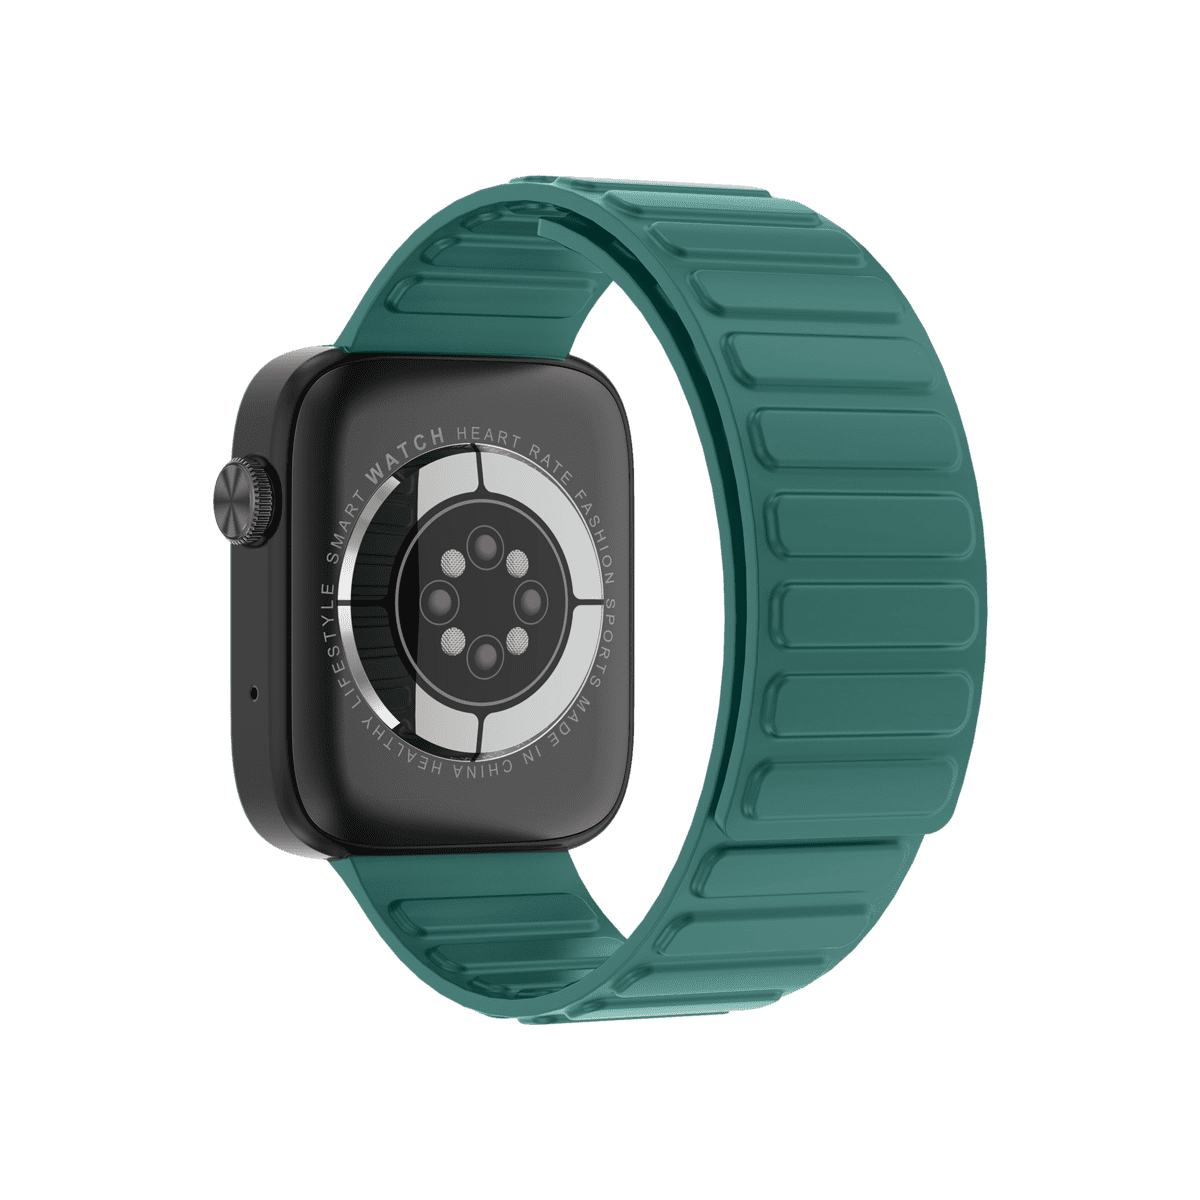 Callfit-5 Smart Watch l Dany Technologies